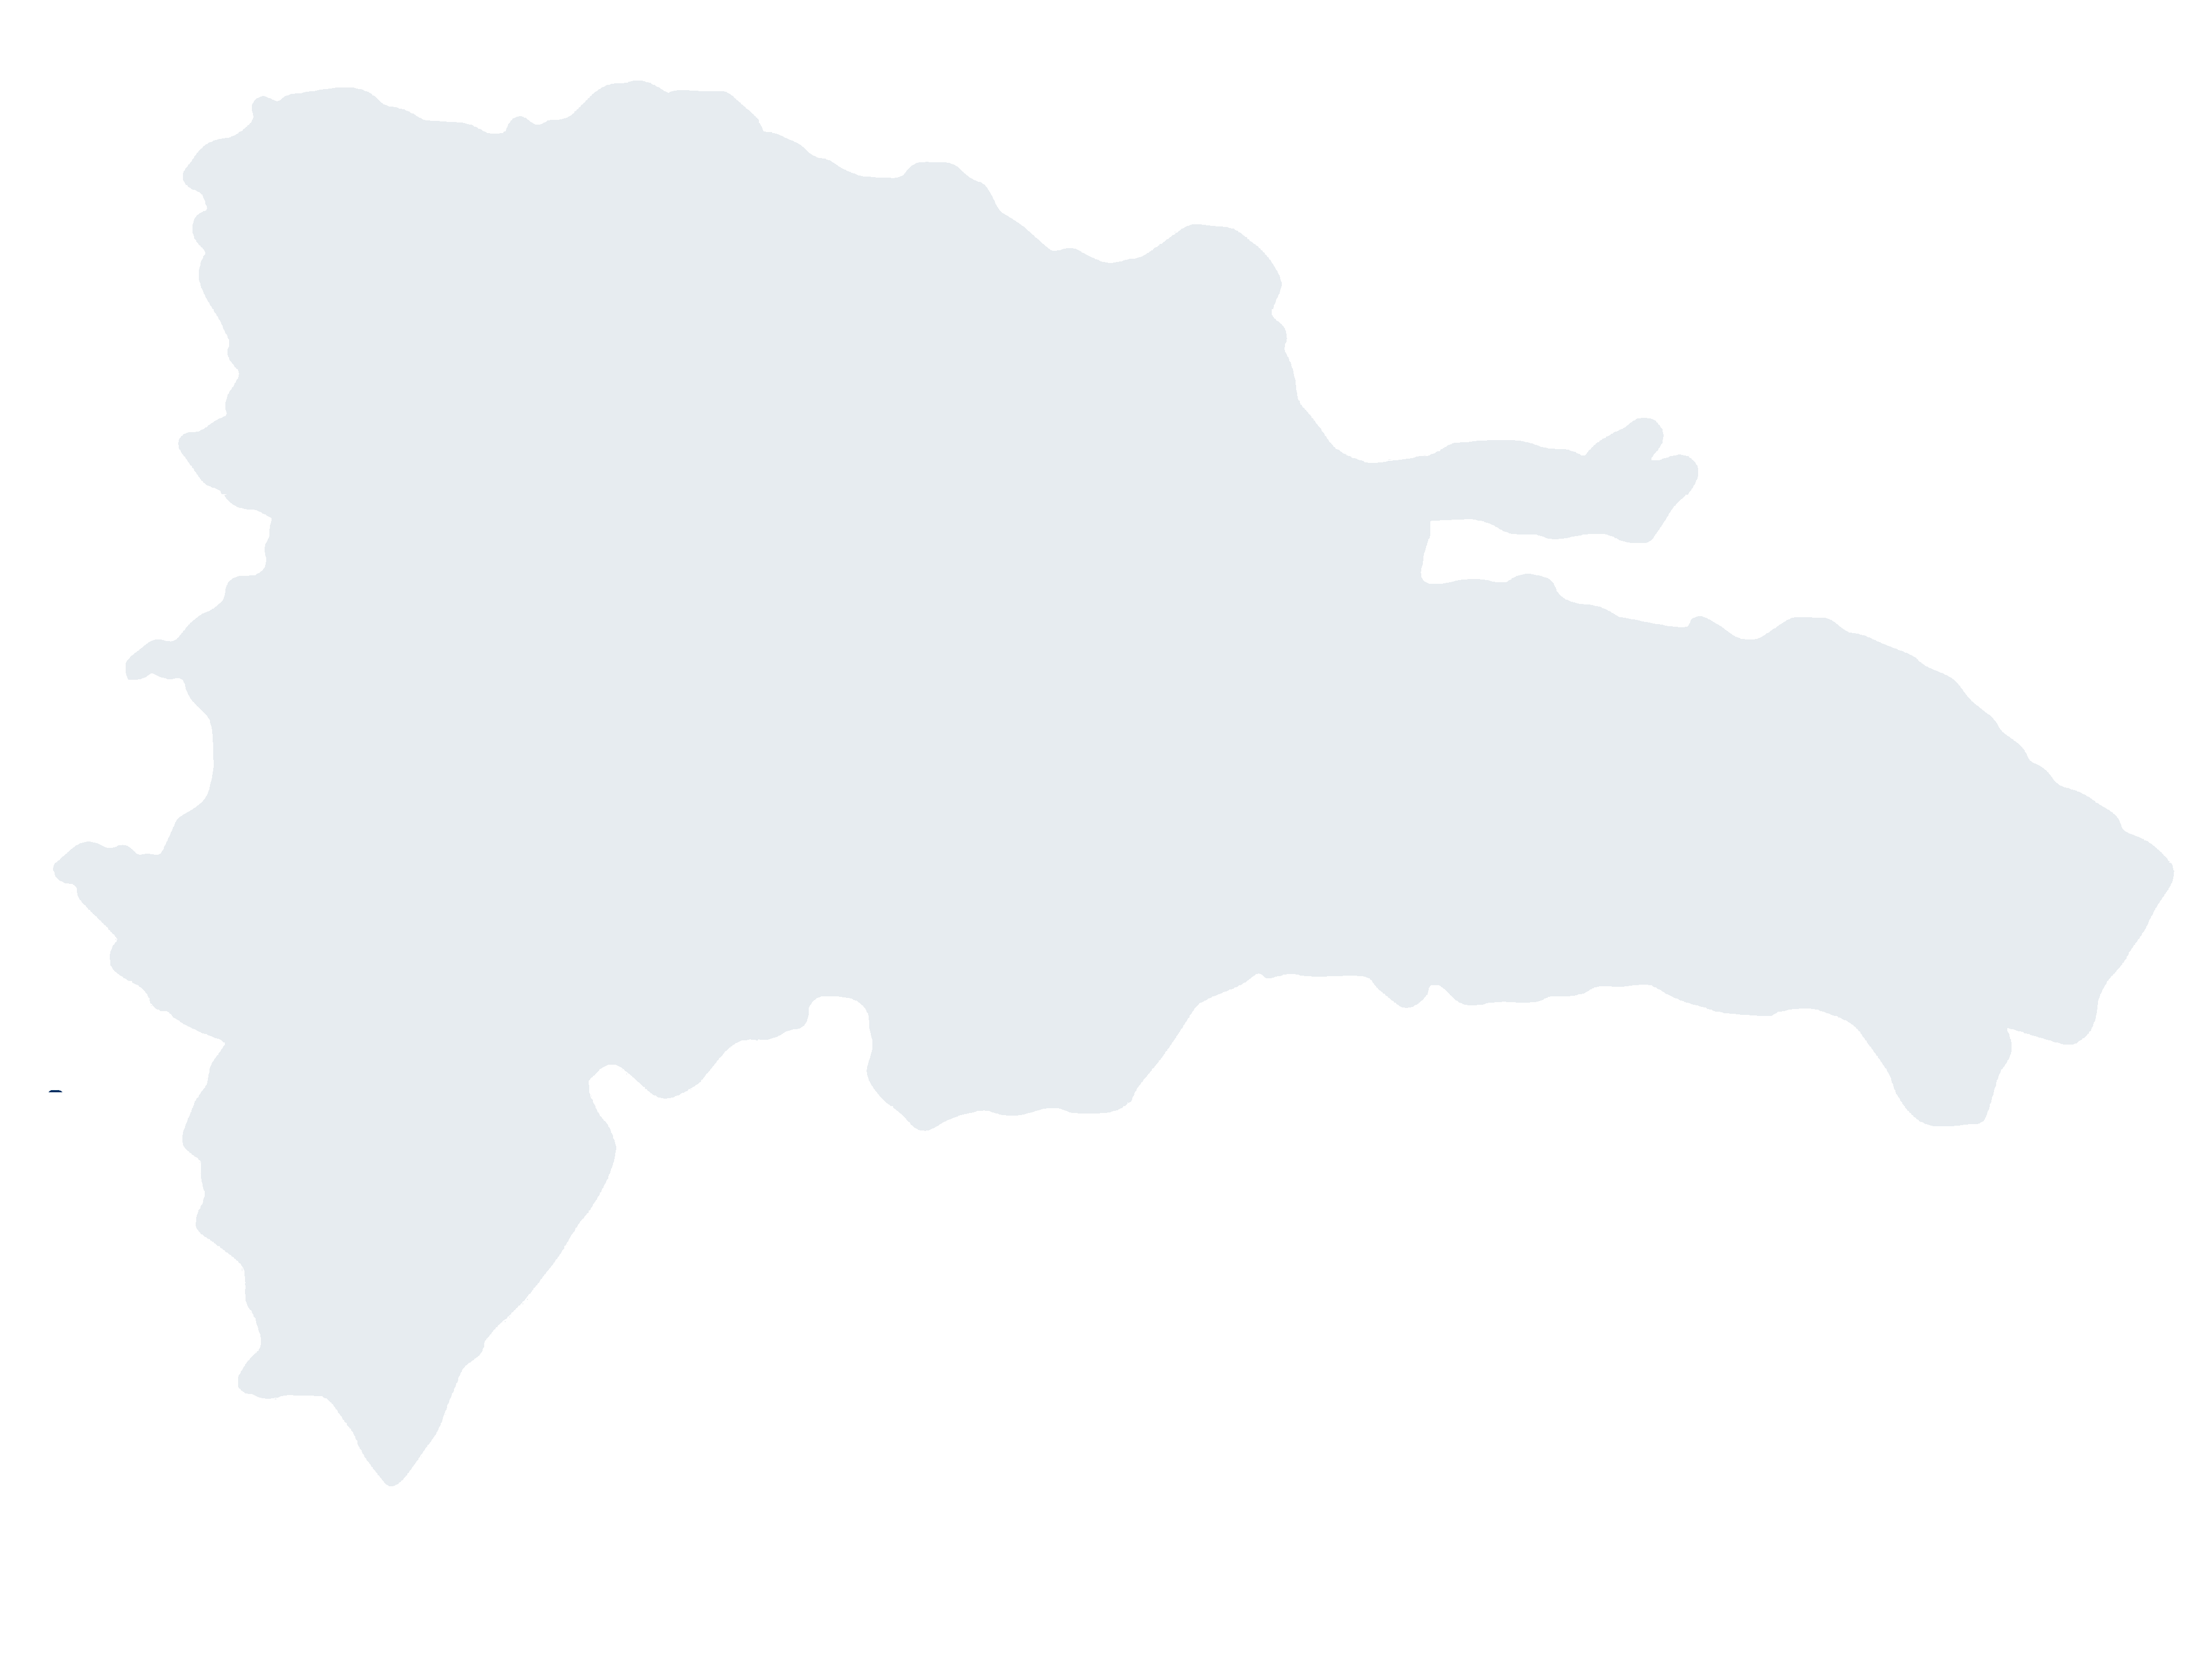 Dominican Republic Outline